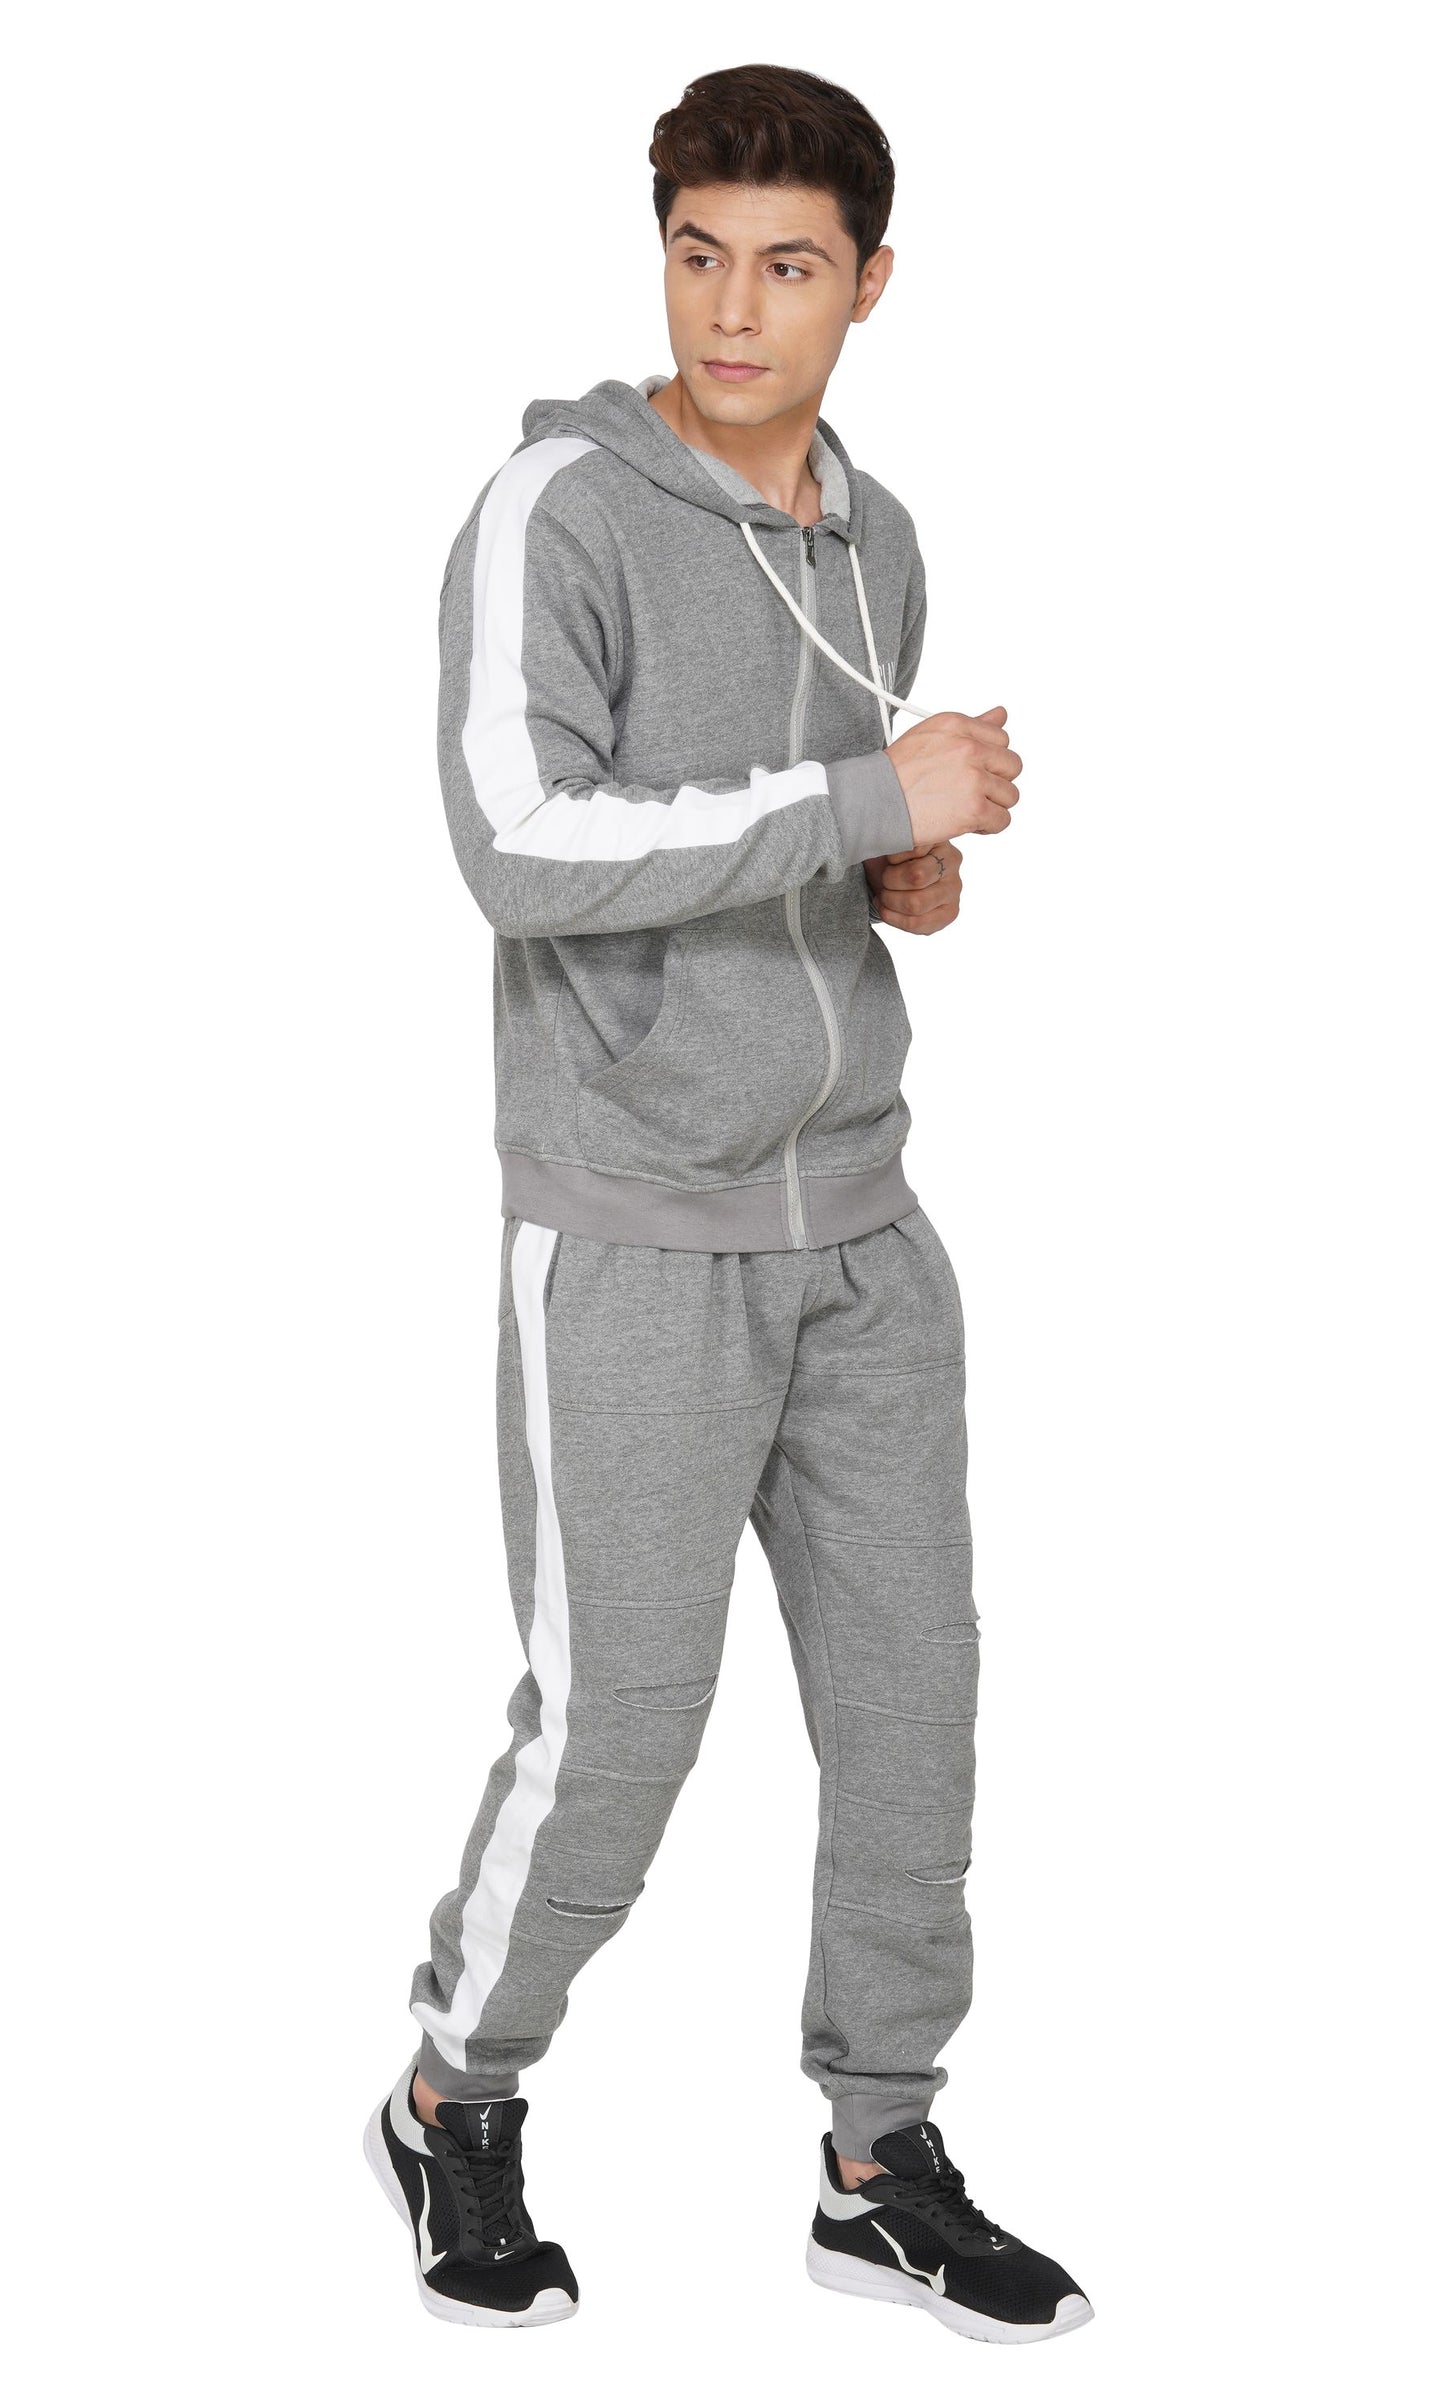 SLAY. Men's Baller Edition Light Grey Tracksuit with White Stripes-clothing-to-slay.myshopify.com-Tracksuit